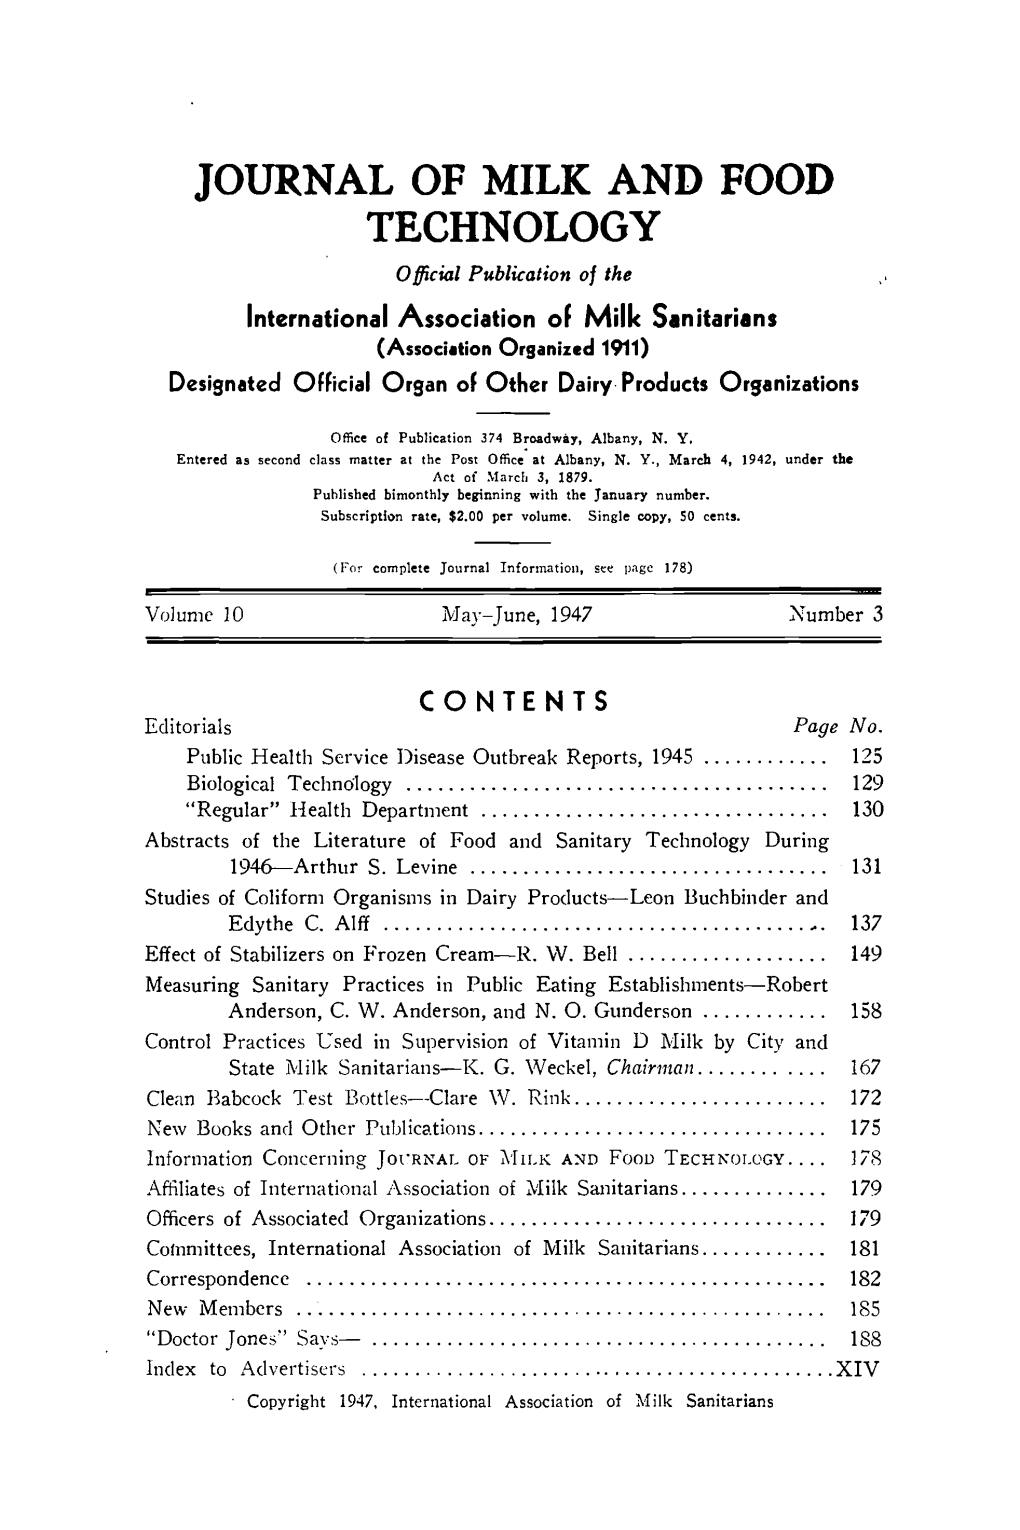 JOURNAL of MILK and FOOD TECHNOLOGY Official Publication of the International Association of Milk Sanitarians (Association Organized 1911)